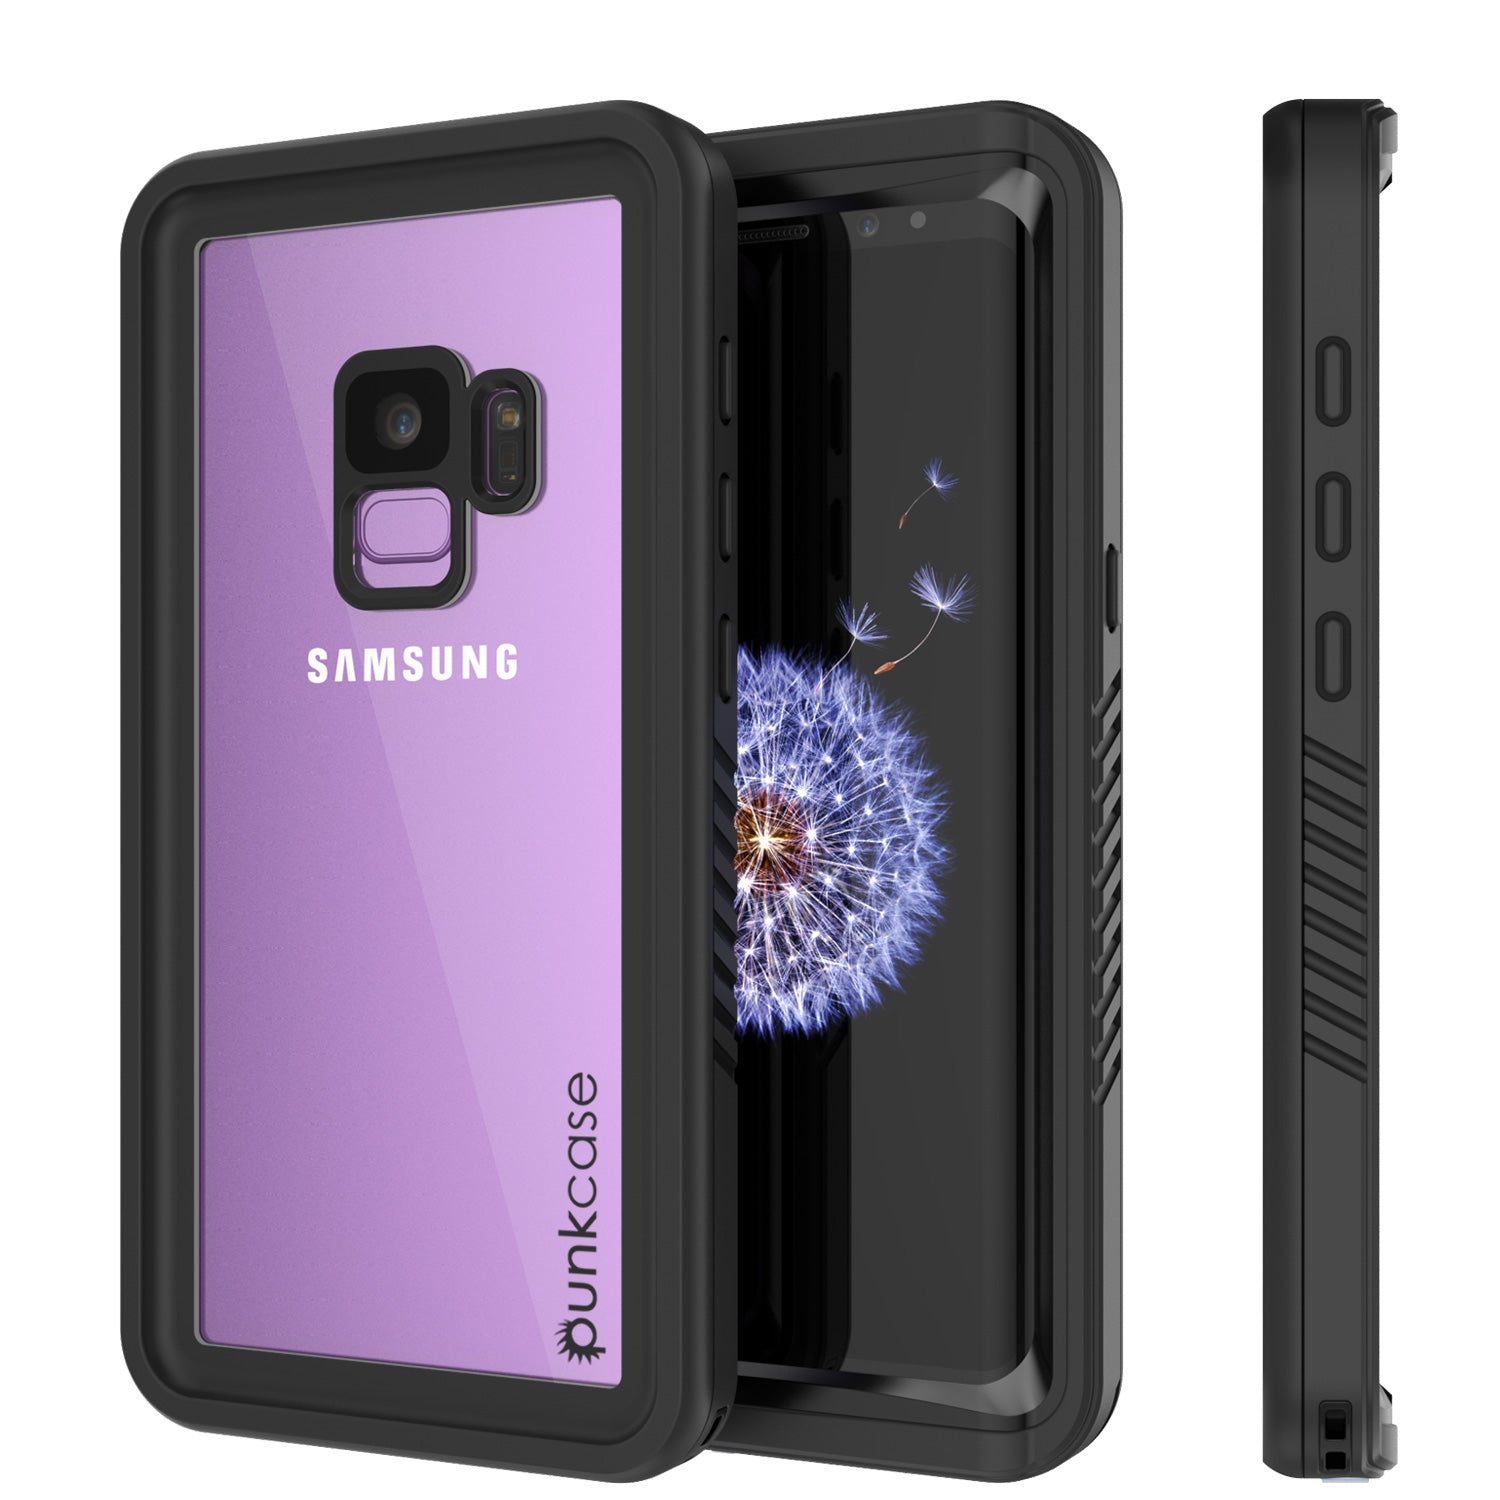 Galaxy S9 PLUS Waterproof Case, Punkcase [Extreme Series] [Slim Fit] [Shock/Snow proof] [Dirproof] Armor Cover W/ Built In Screen Protector [Black]